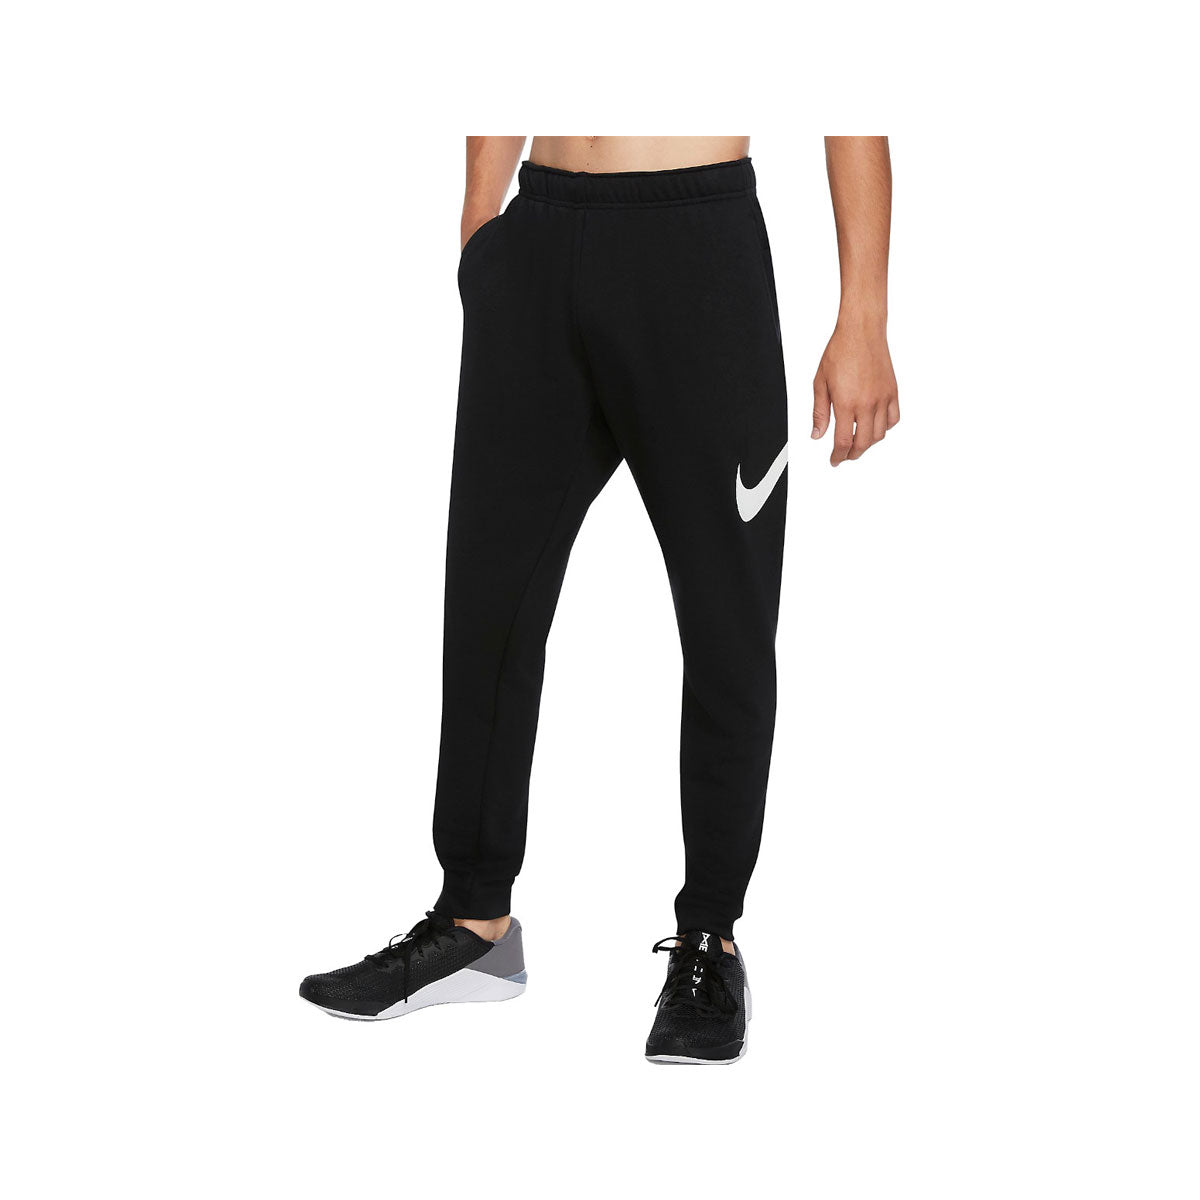 Nike Men's Dri-FIT Swoosh Tapered Training Pants